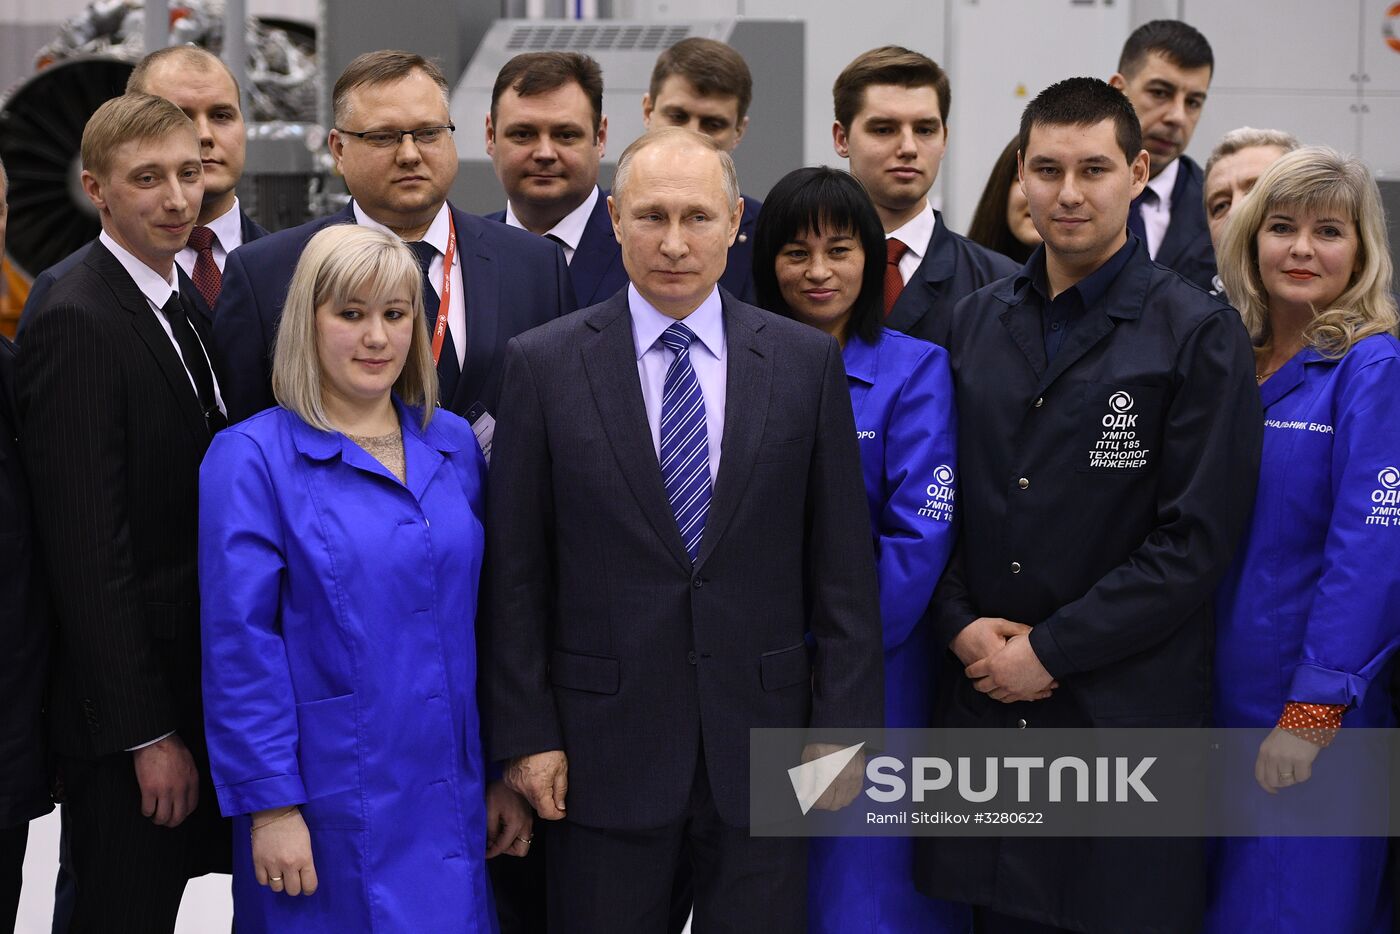 President Vladimir Putin's working visit to Republic of Bashkortostan